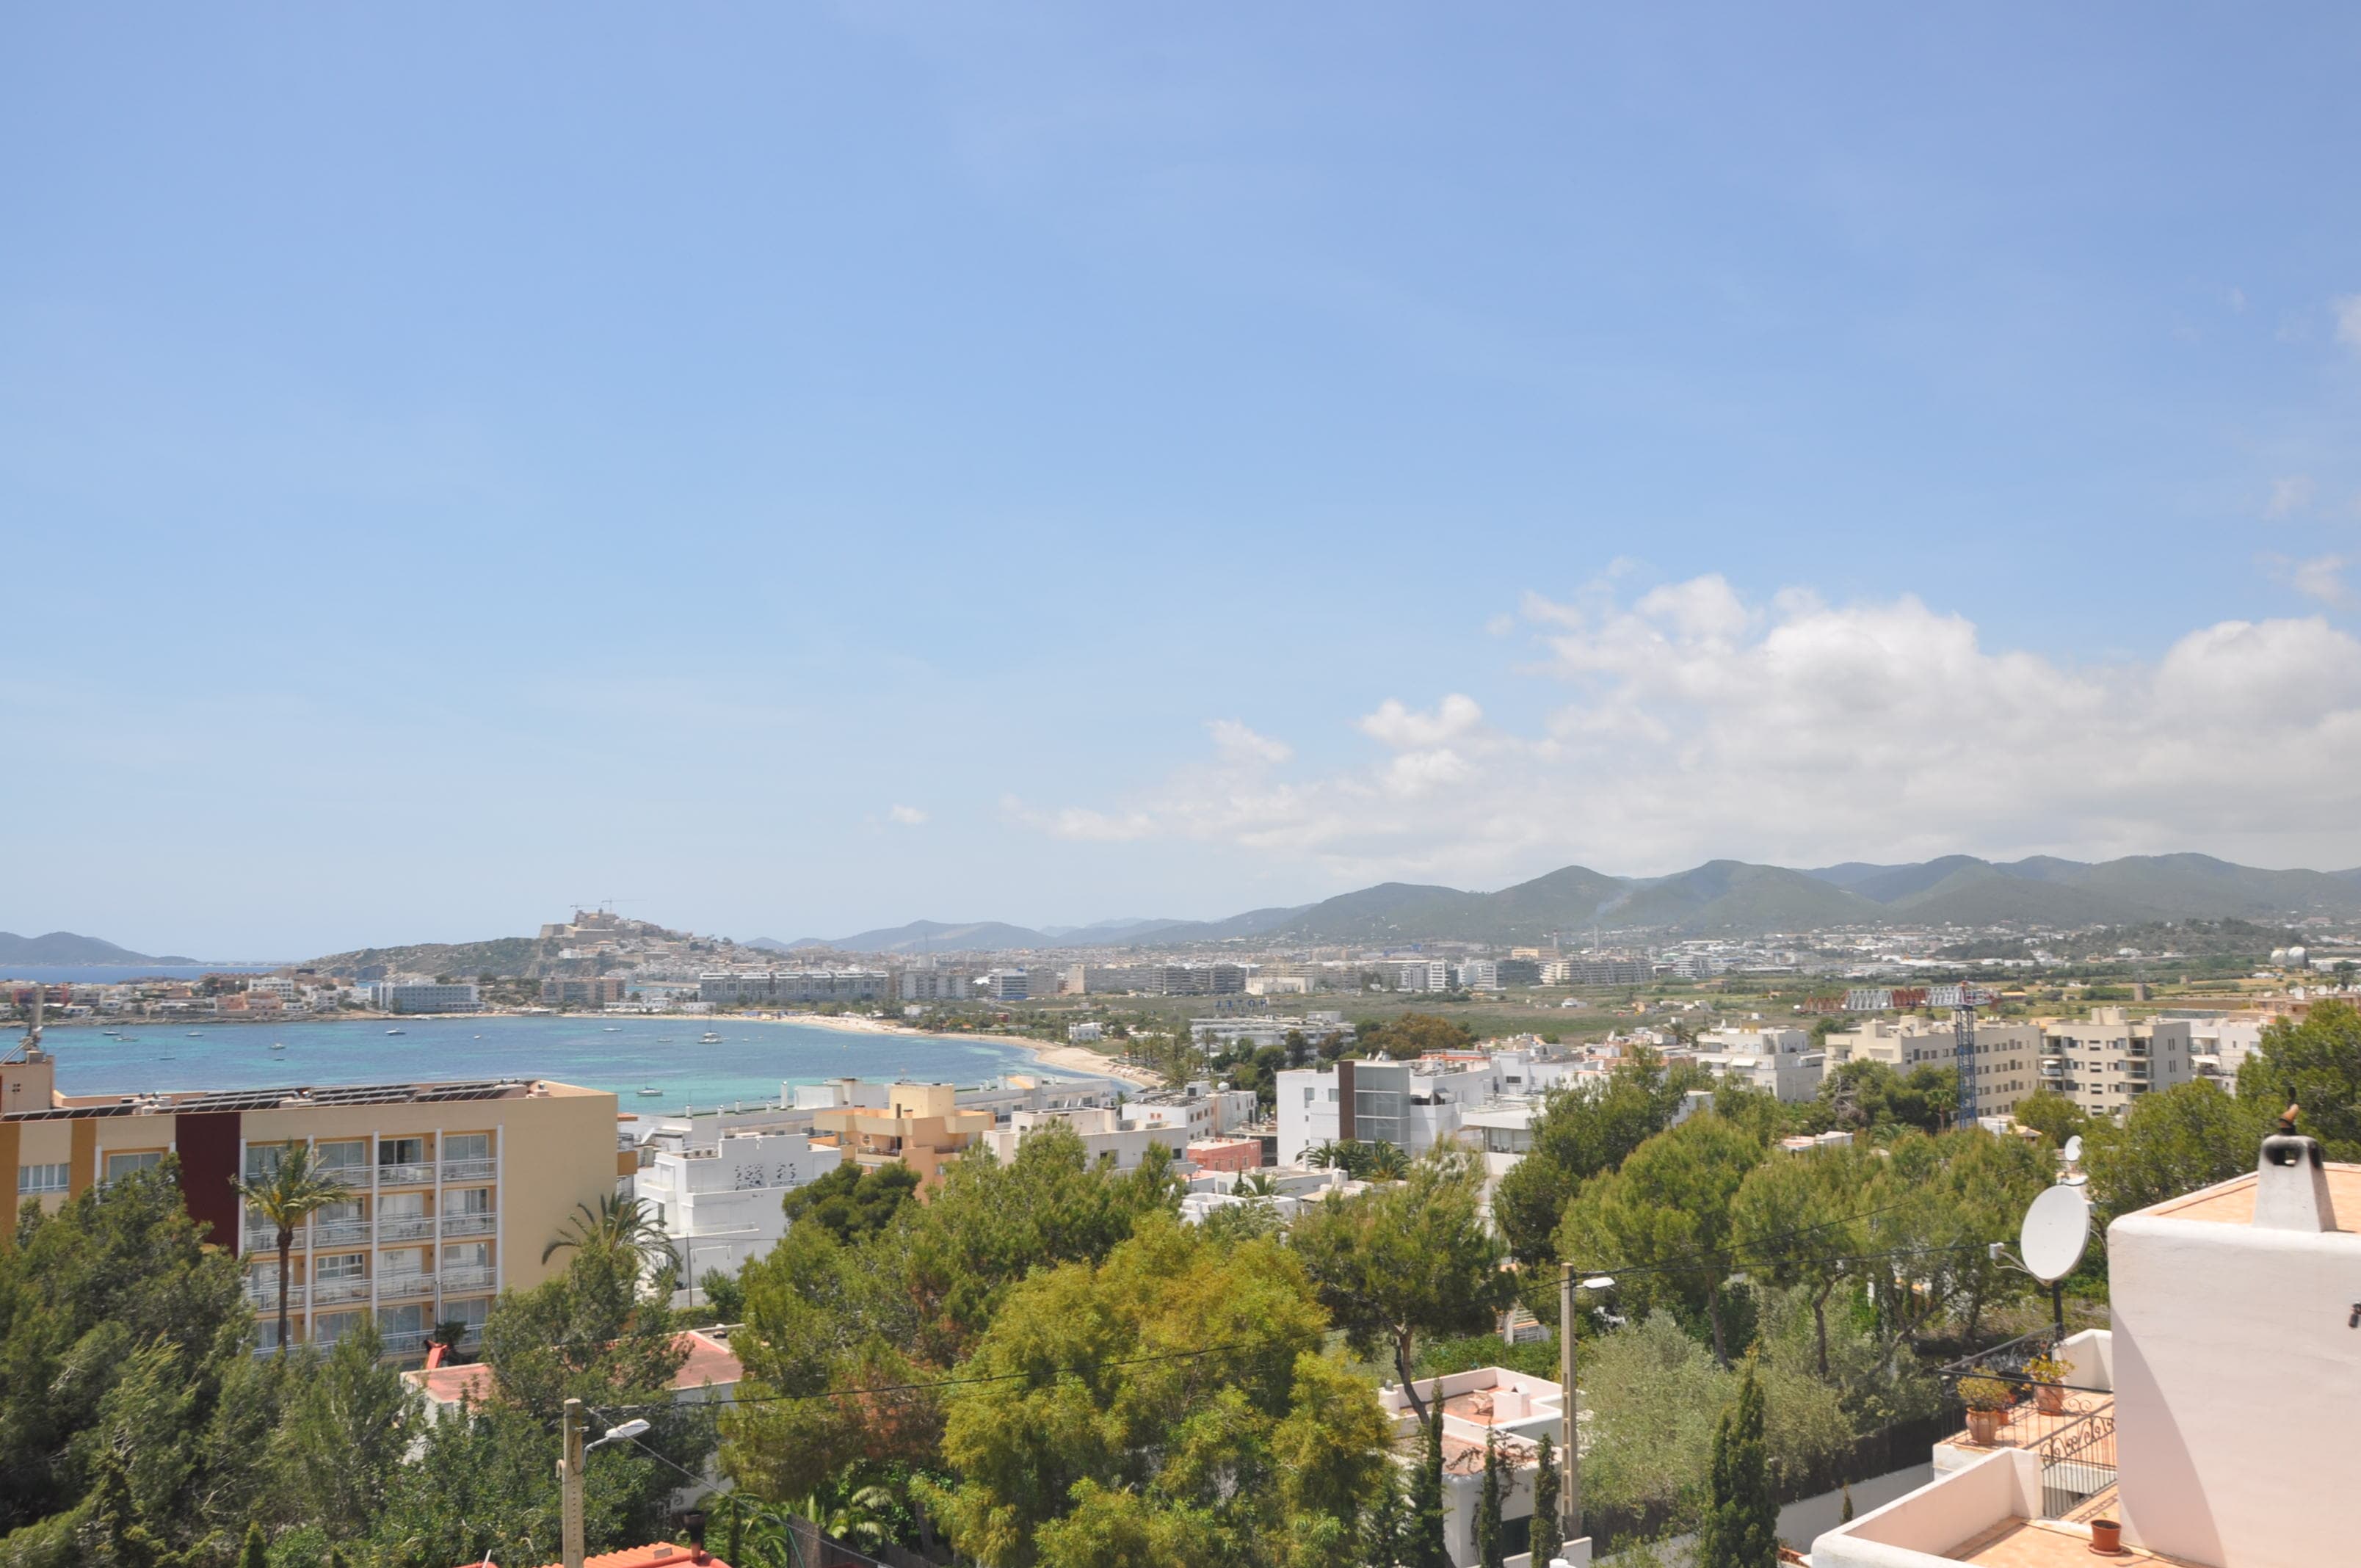 Views from luxury villa in Ibiza